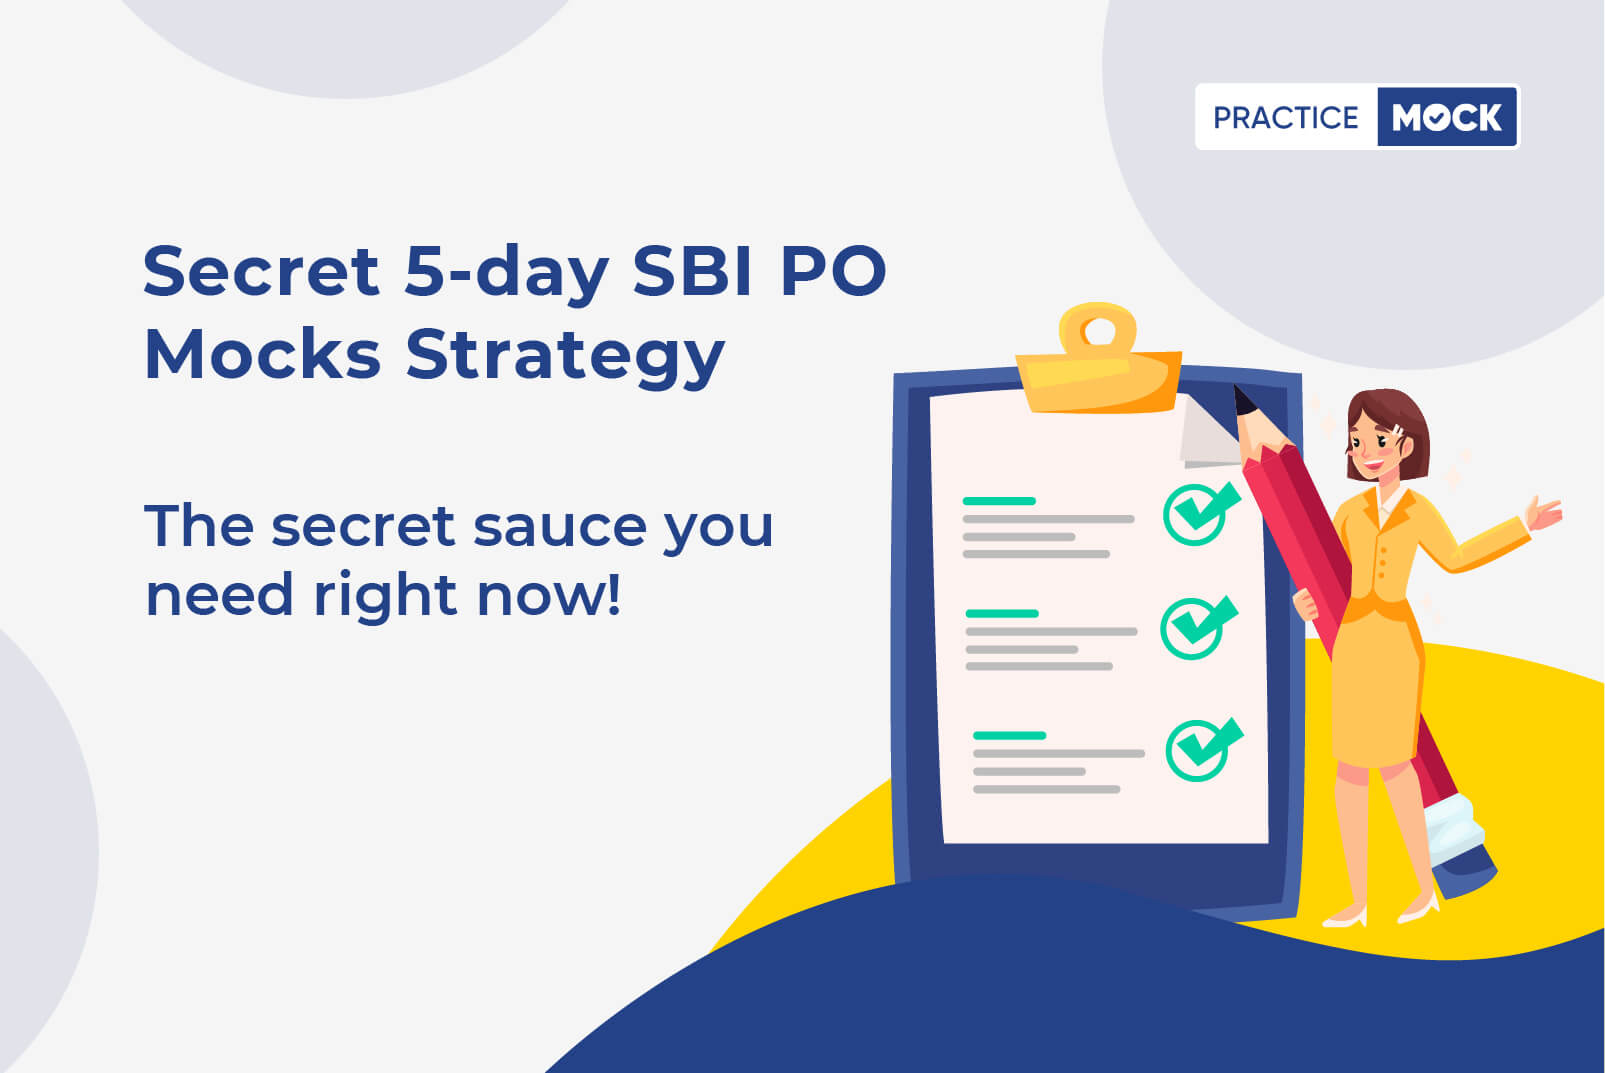 Secret 5-day SBI PO Mocks Strategy